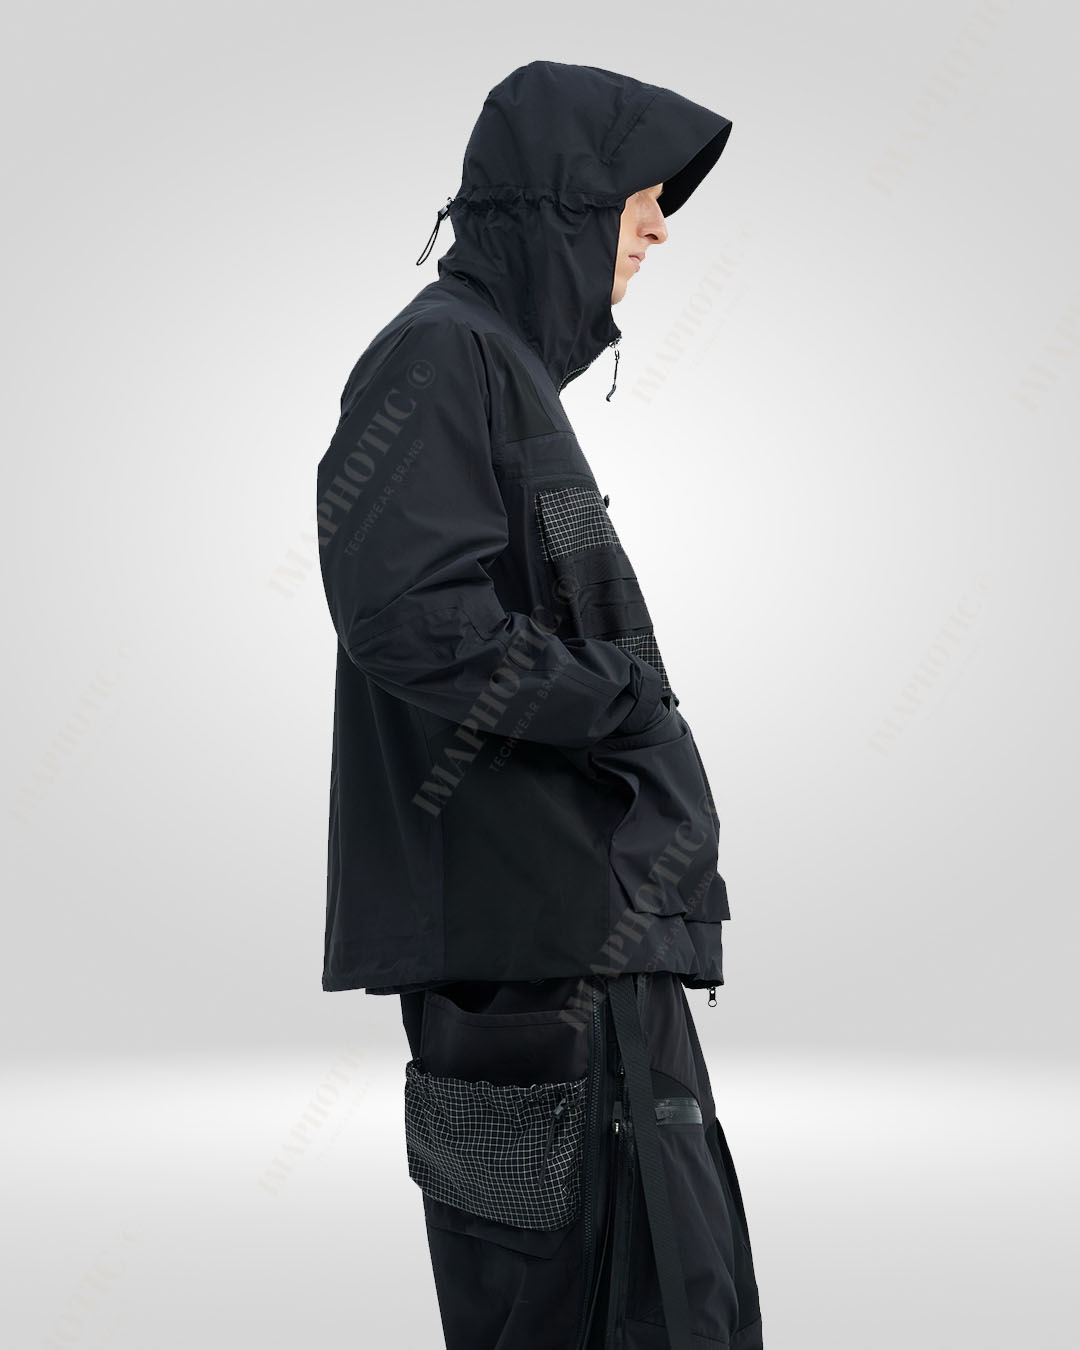 Aufstiegschancen Adventurer\'s Hooded Jacket Style - Defy Outdoor Elements the in – Imaphotic